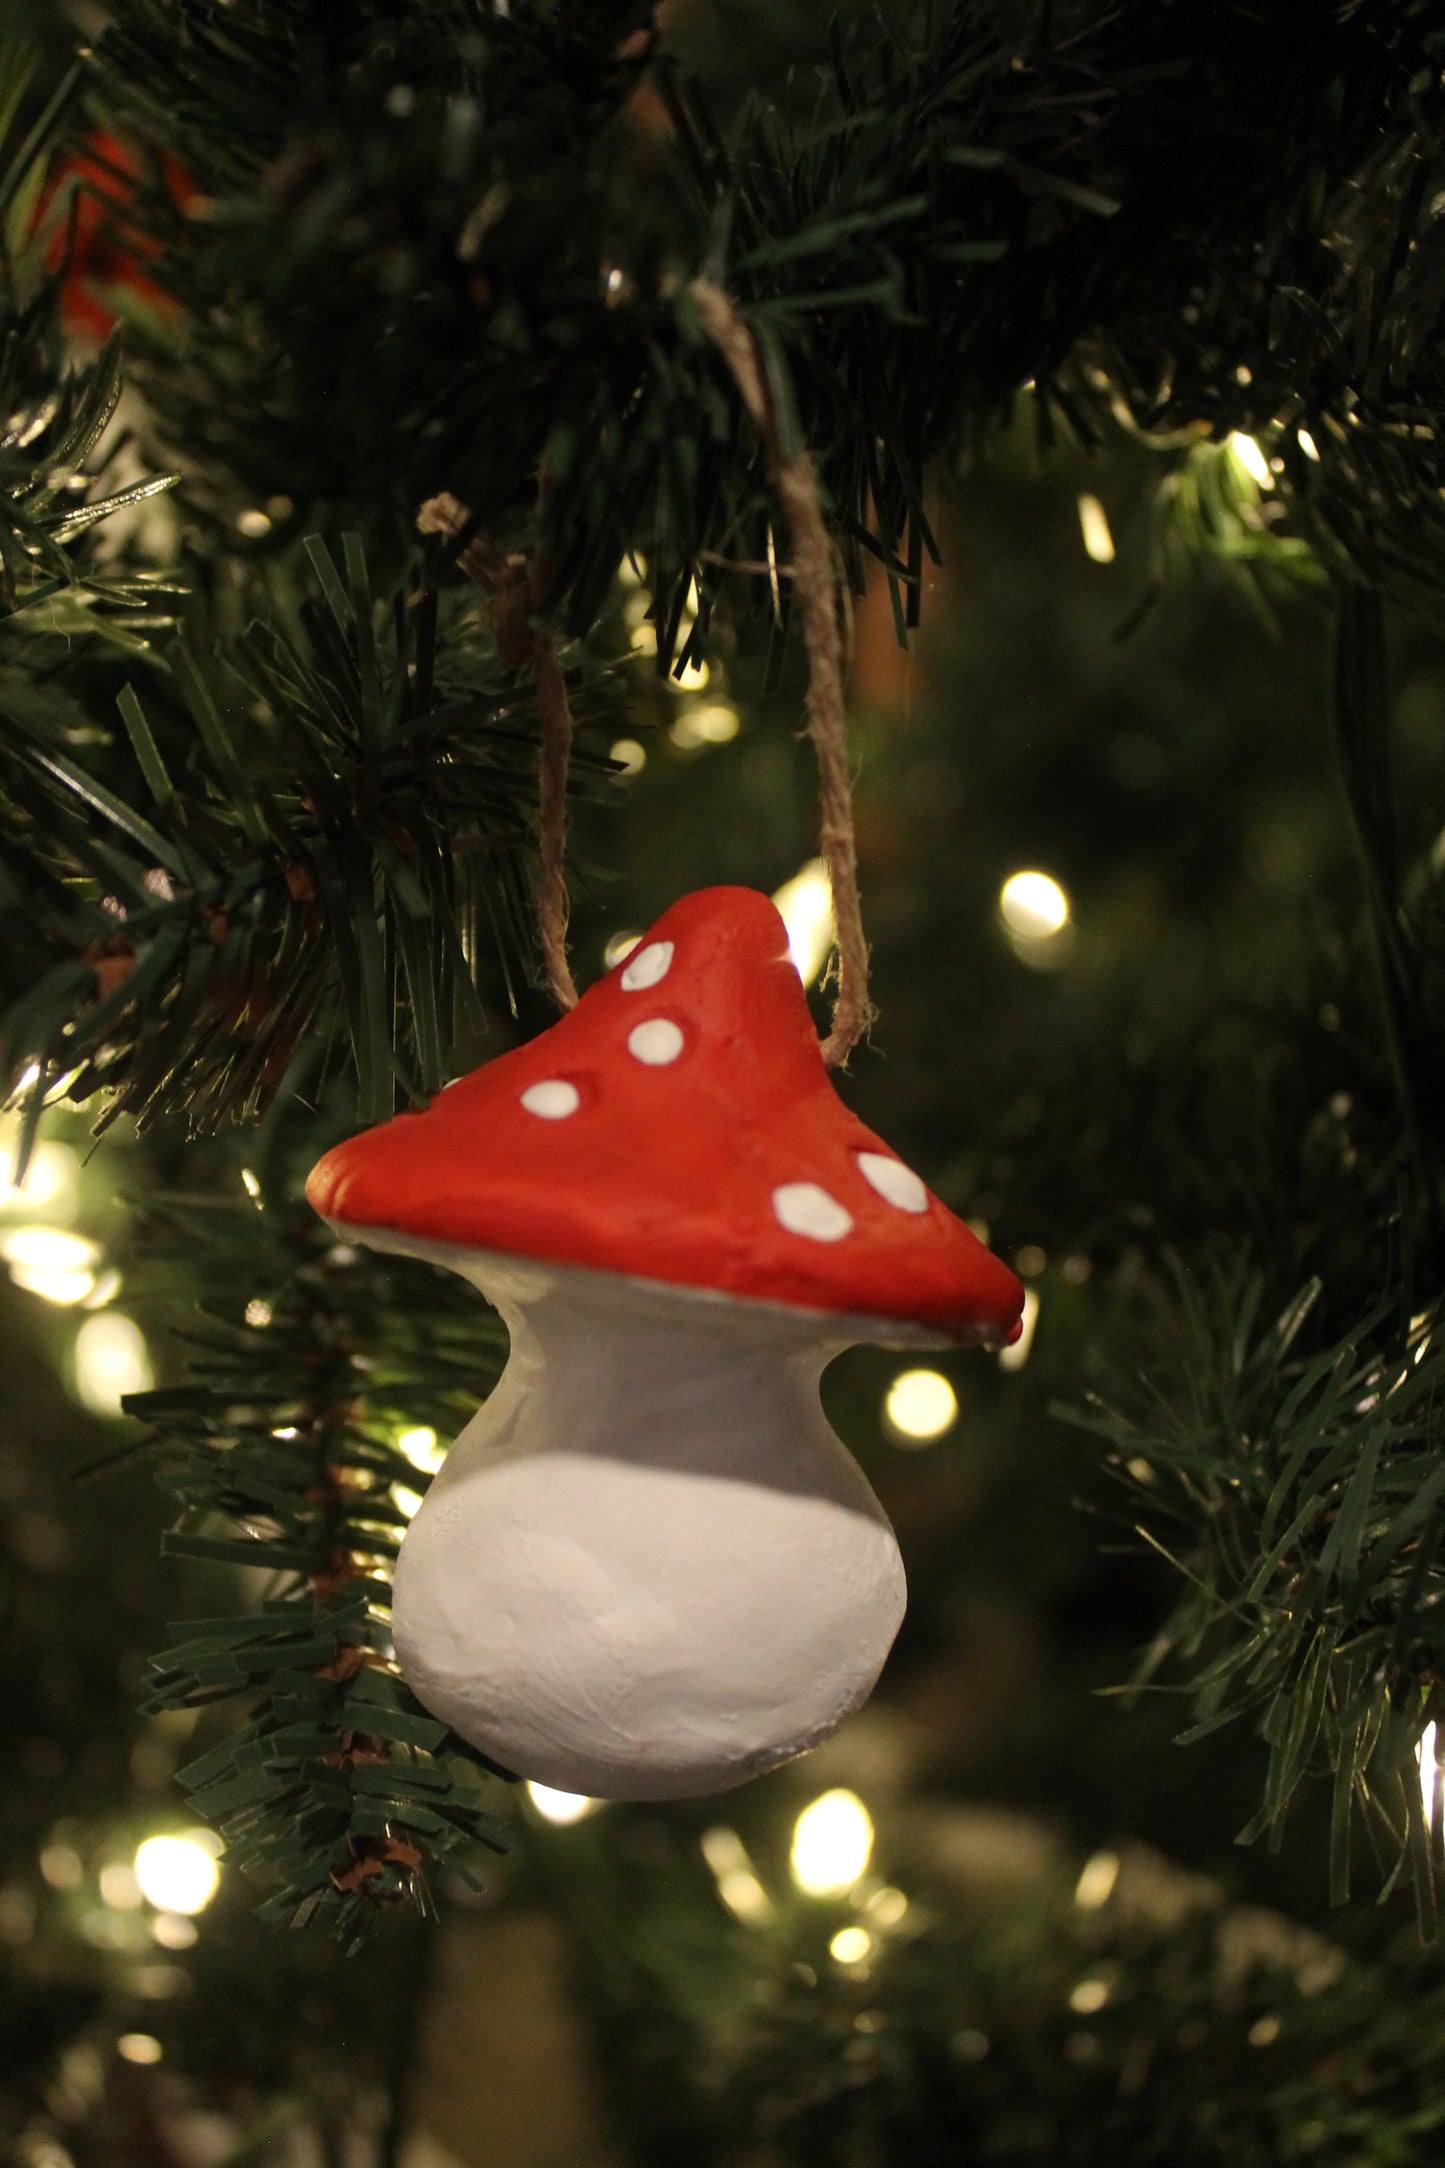 2 Mushroom Ornaments